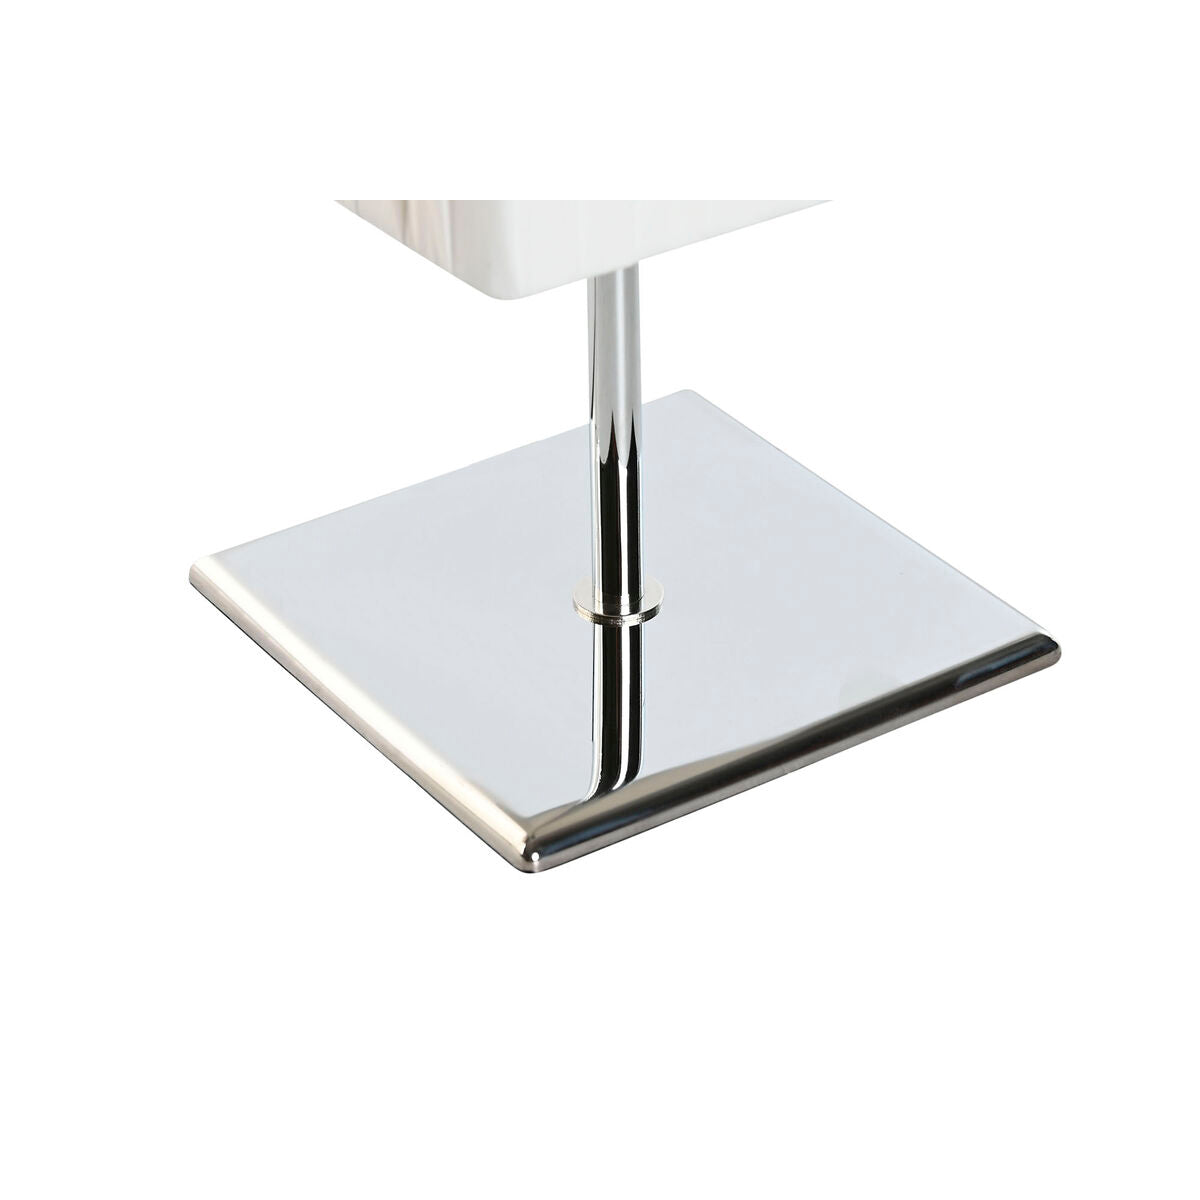 Desk lamp Home ESPRIT White Silver Polyethylene Iron 50 W 220 V 15 x 15 x 43 cm